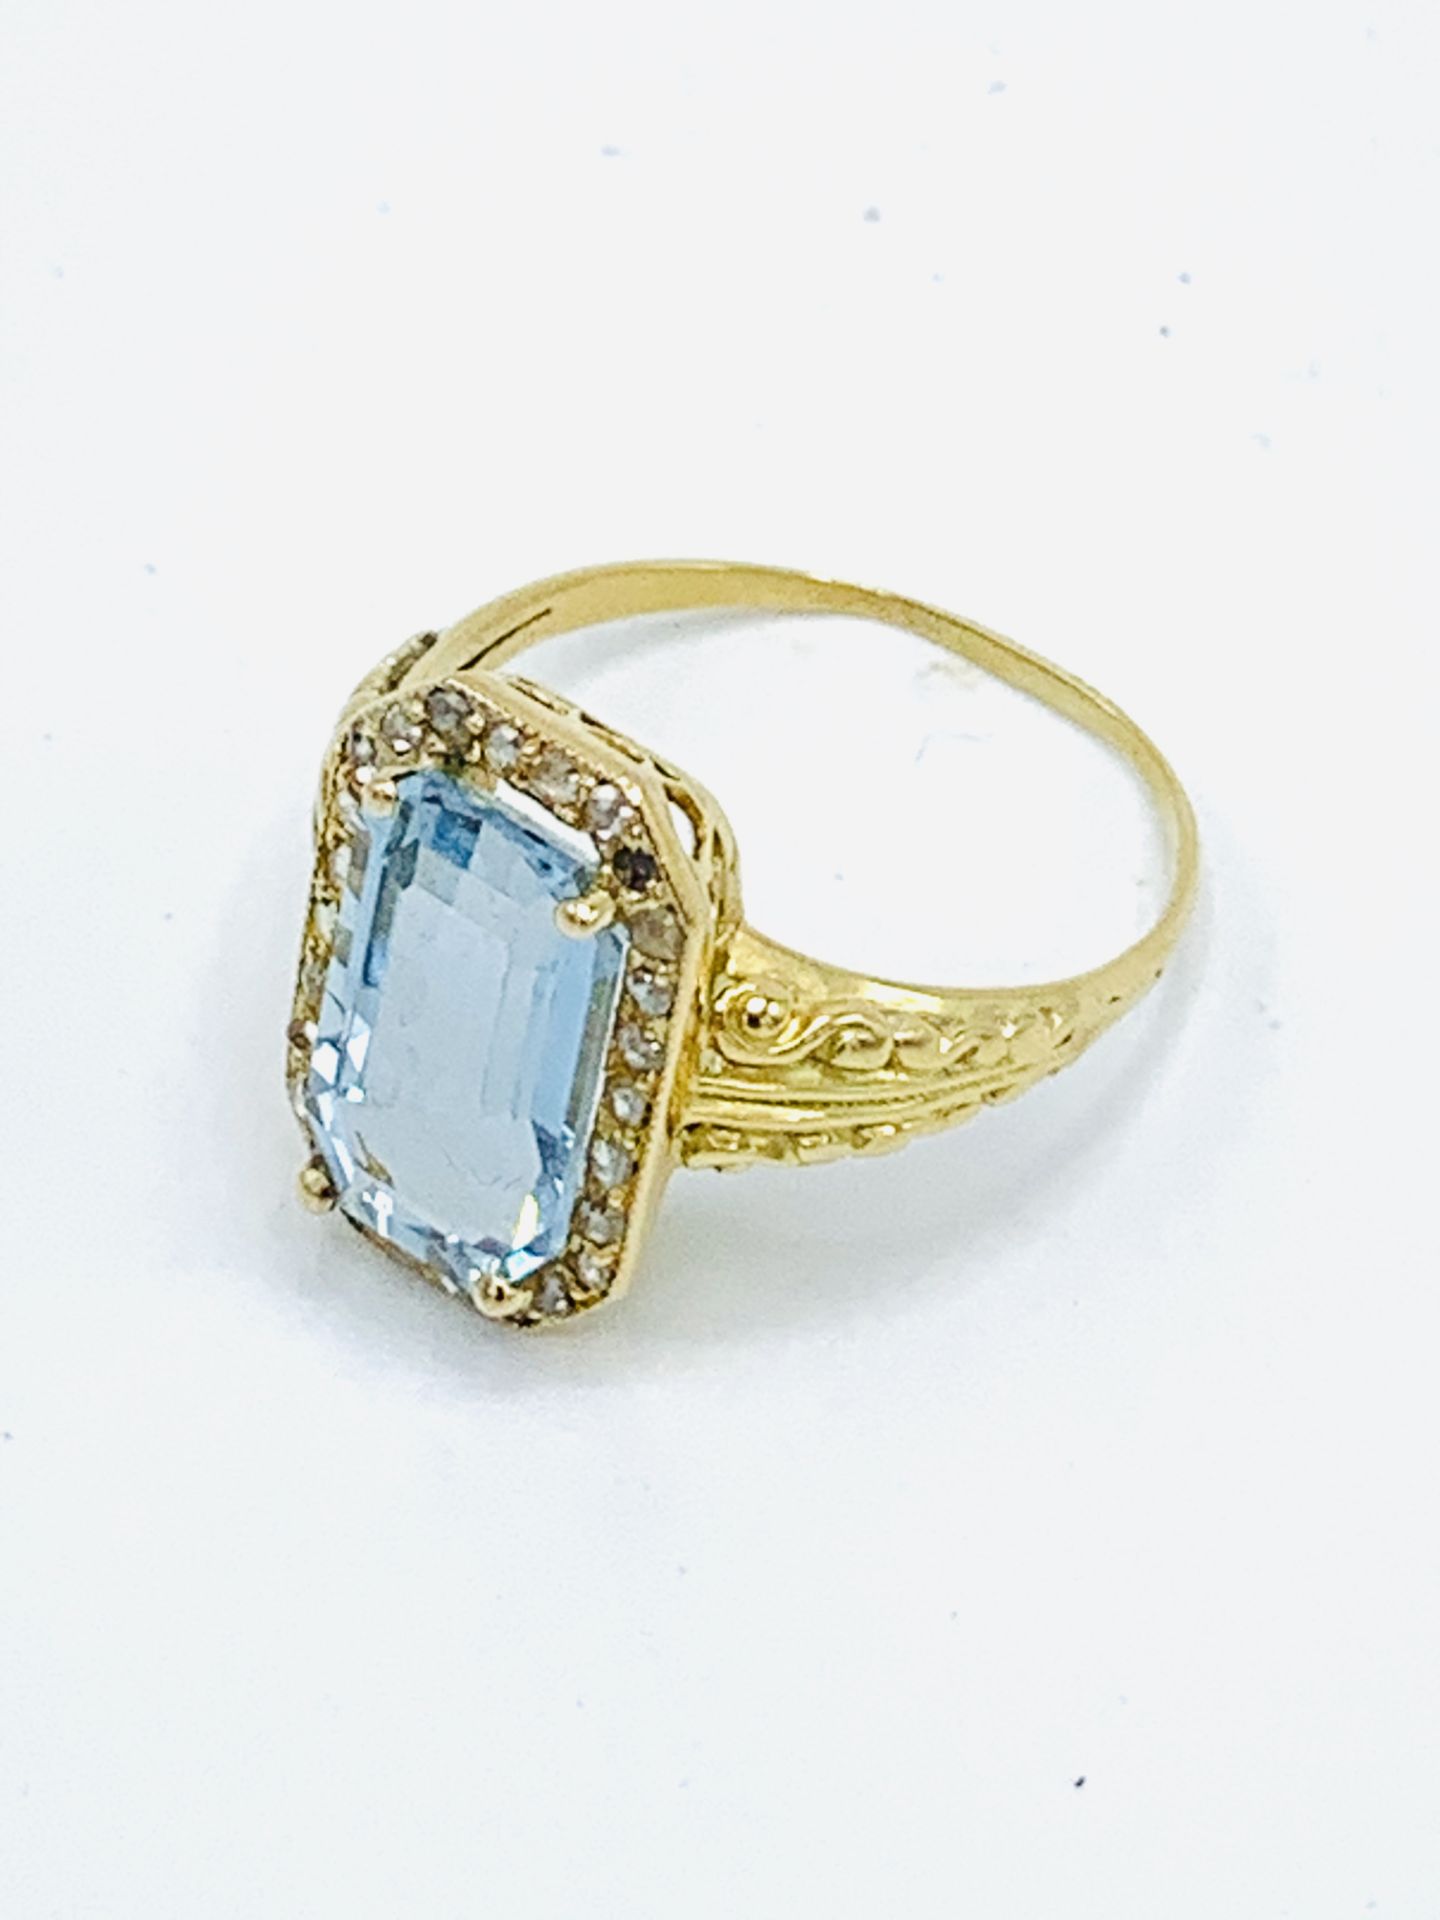 Aquamarine and diamond ring. - Image 2 of 4